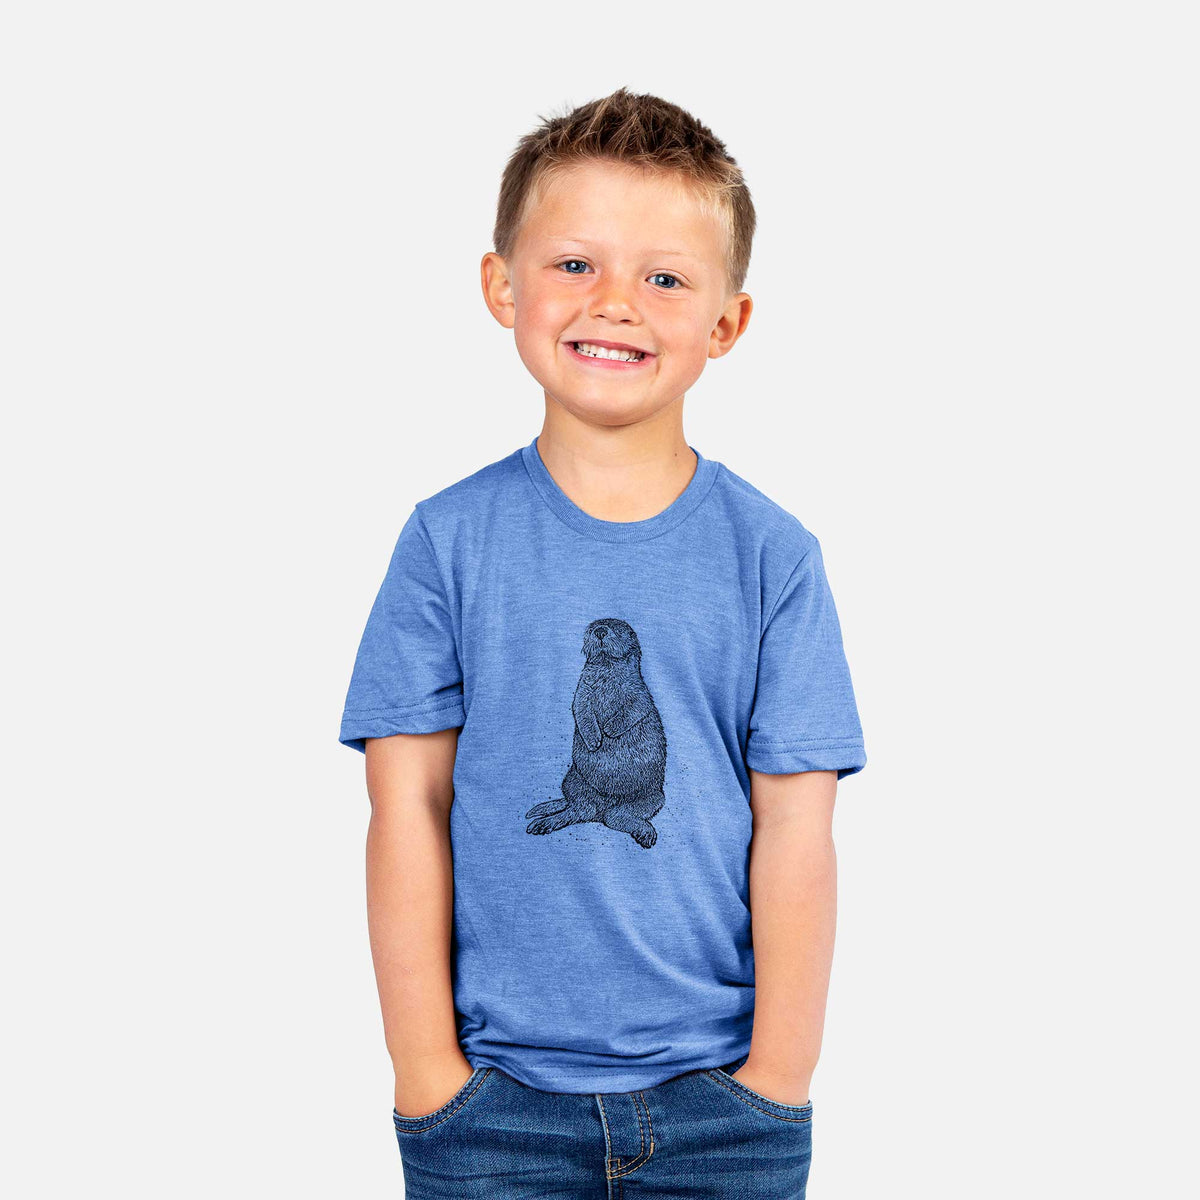 Enhydra lutris - California Sea Otter - Kids Shirt